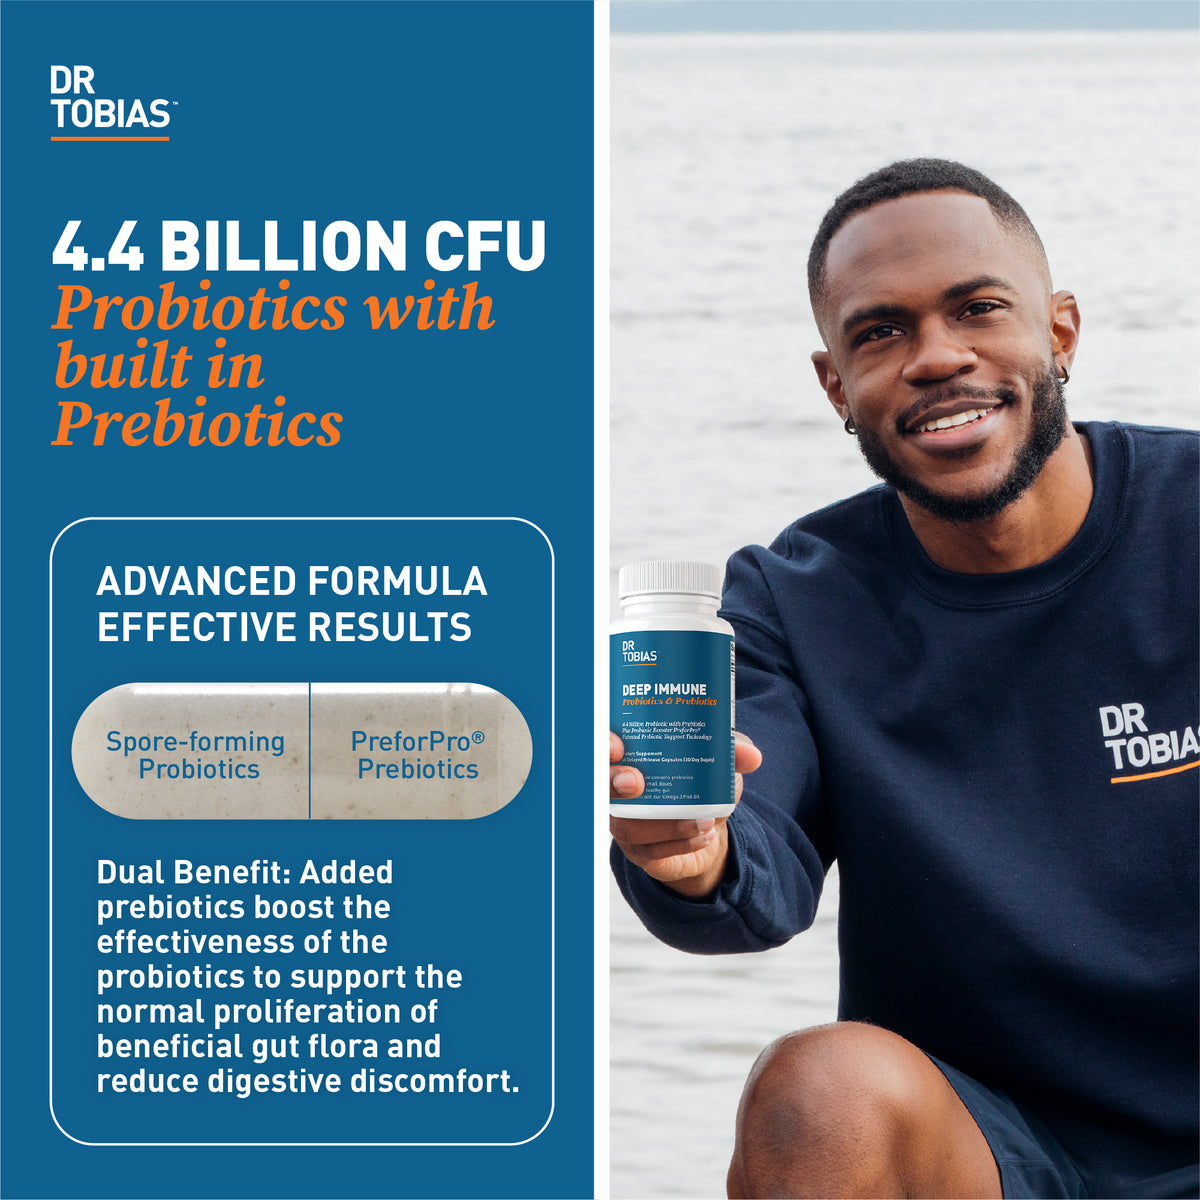 4.4 billion CFU probiotics with built in prebiotics